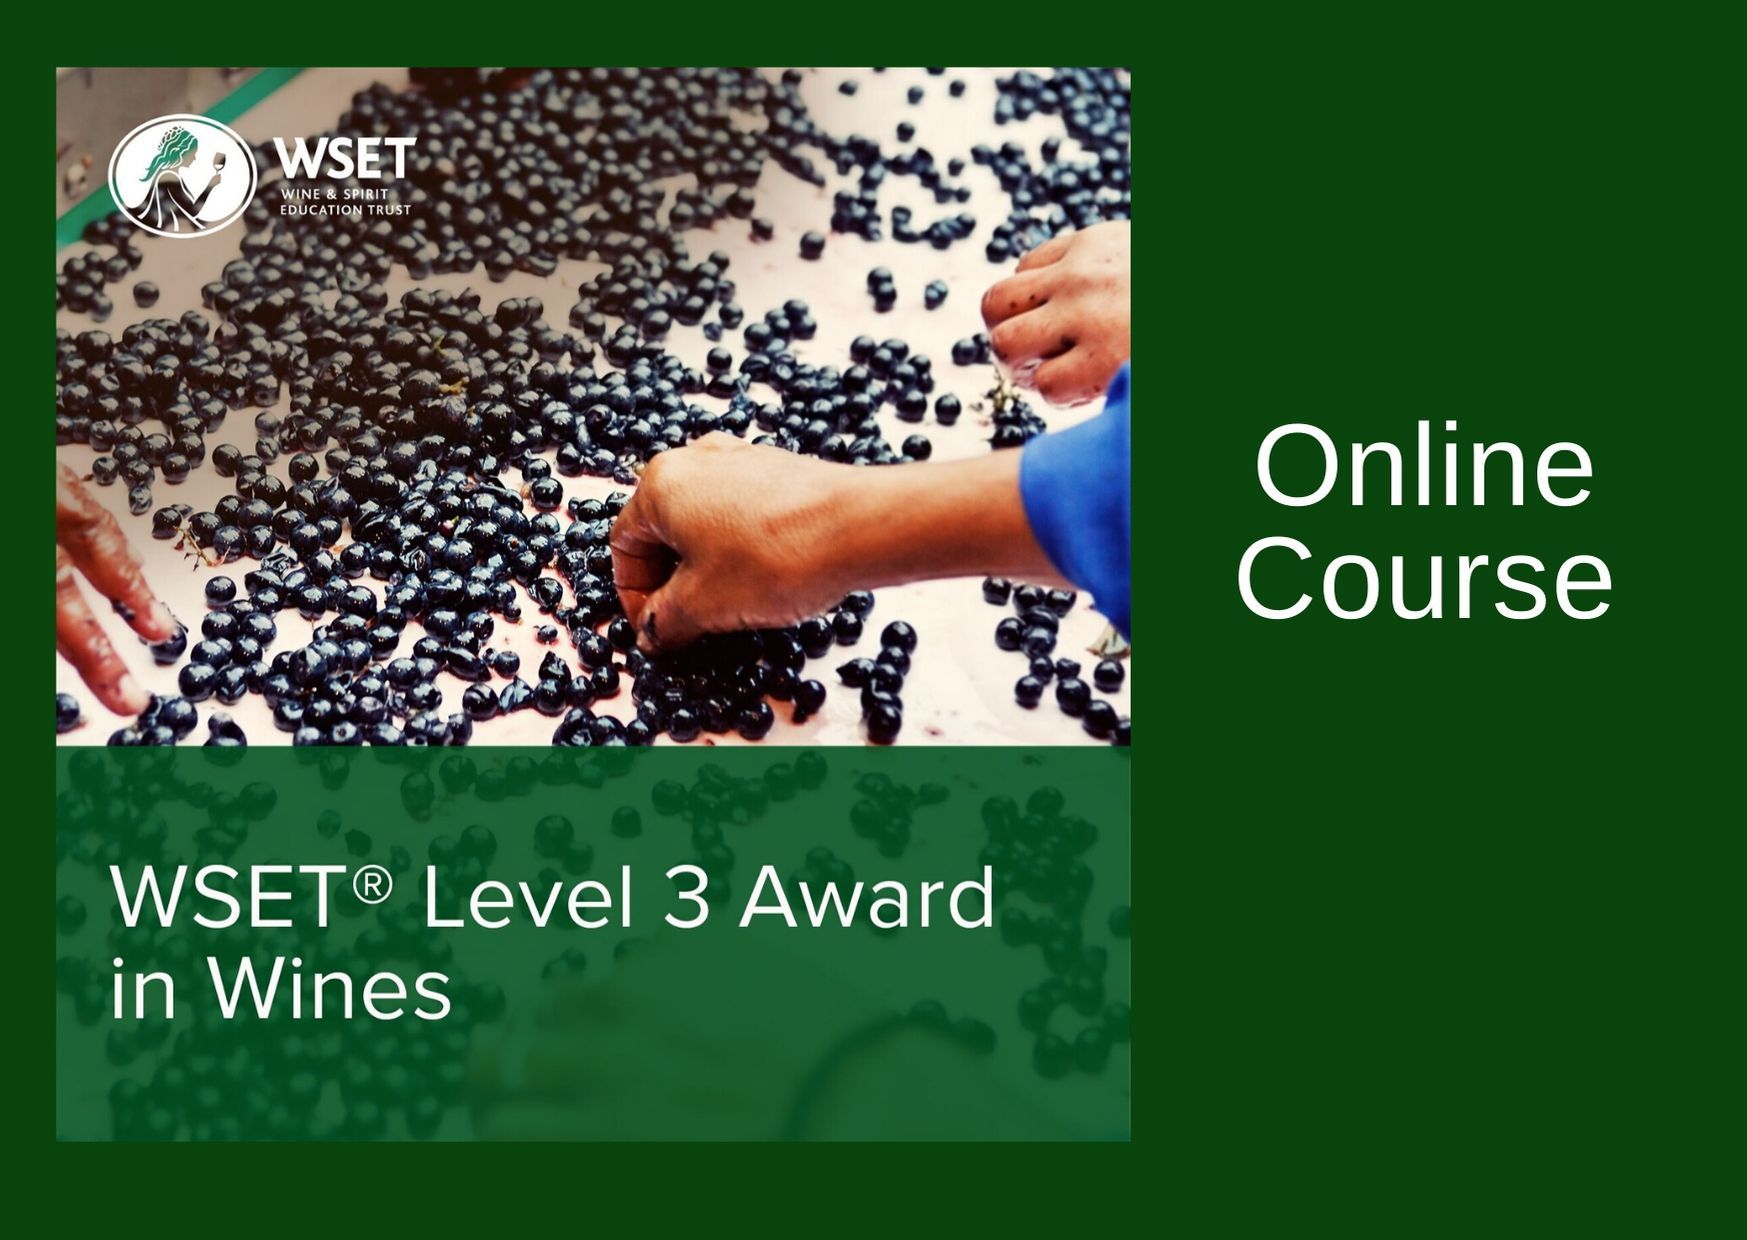  WSET Level 3 Award in Wines & Exam - Online - Sept 2021